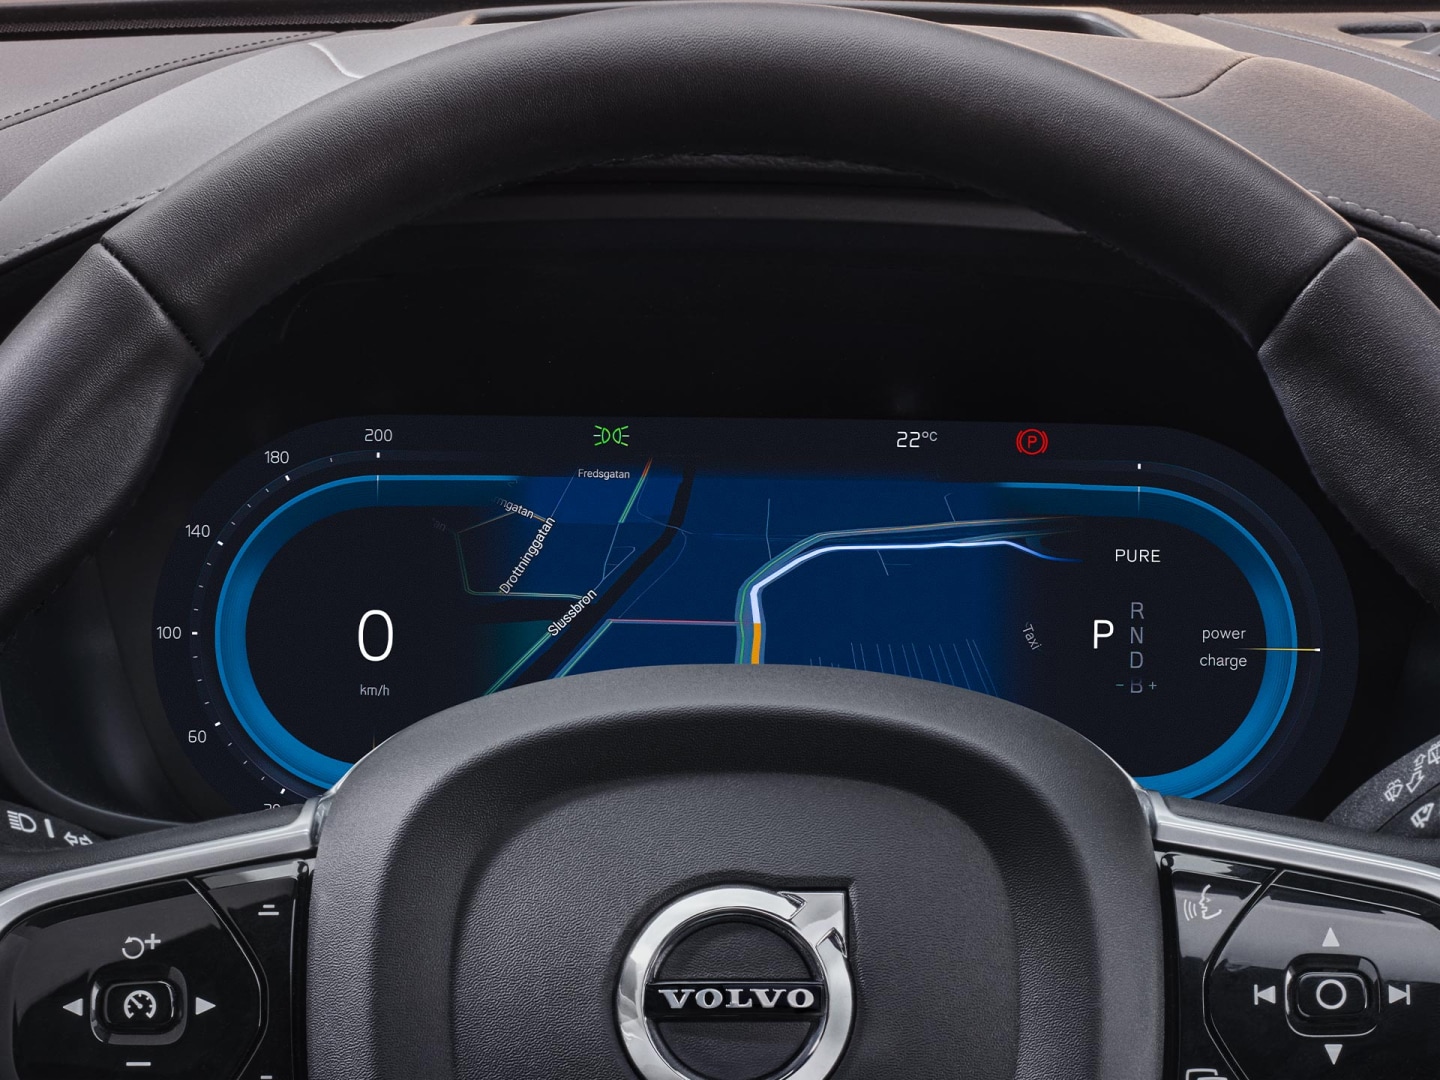 Blick vom Fahrersitz auf das Lenkrad und Fahrerdisplay des Volvo V90 Plug-in Hybrid.